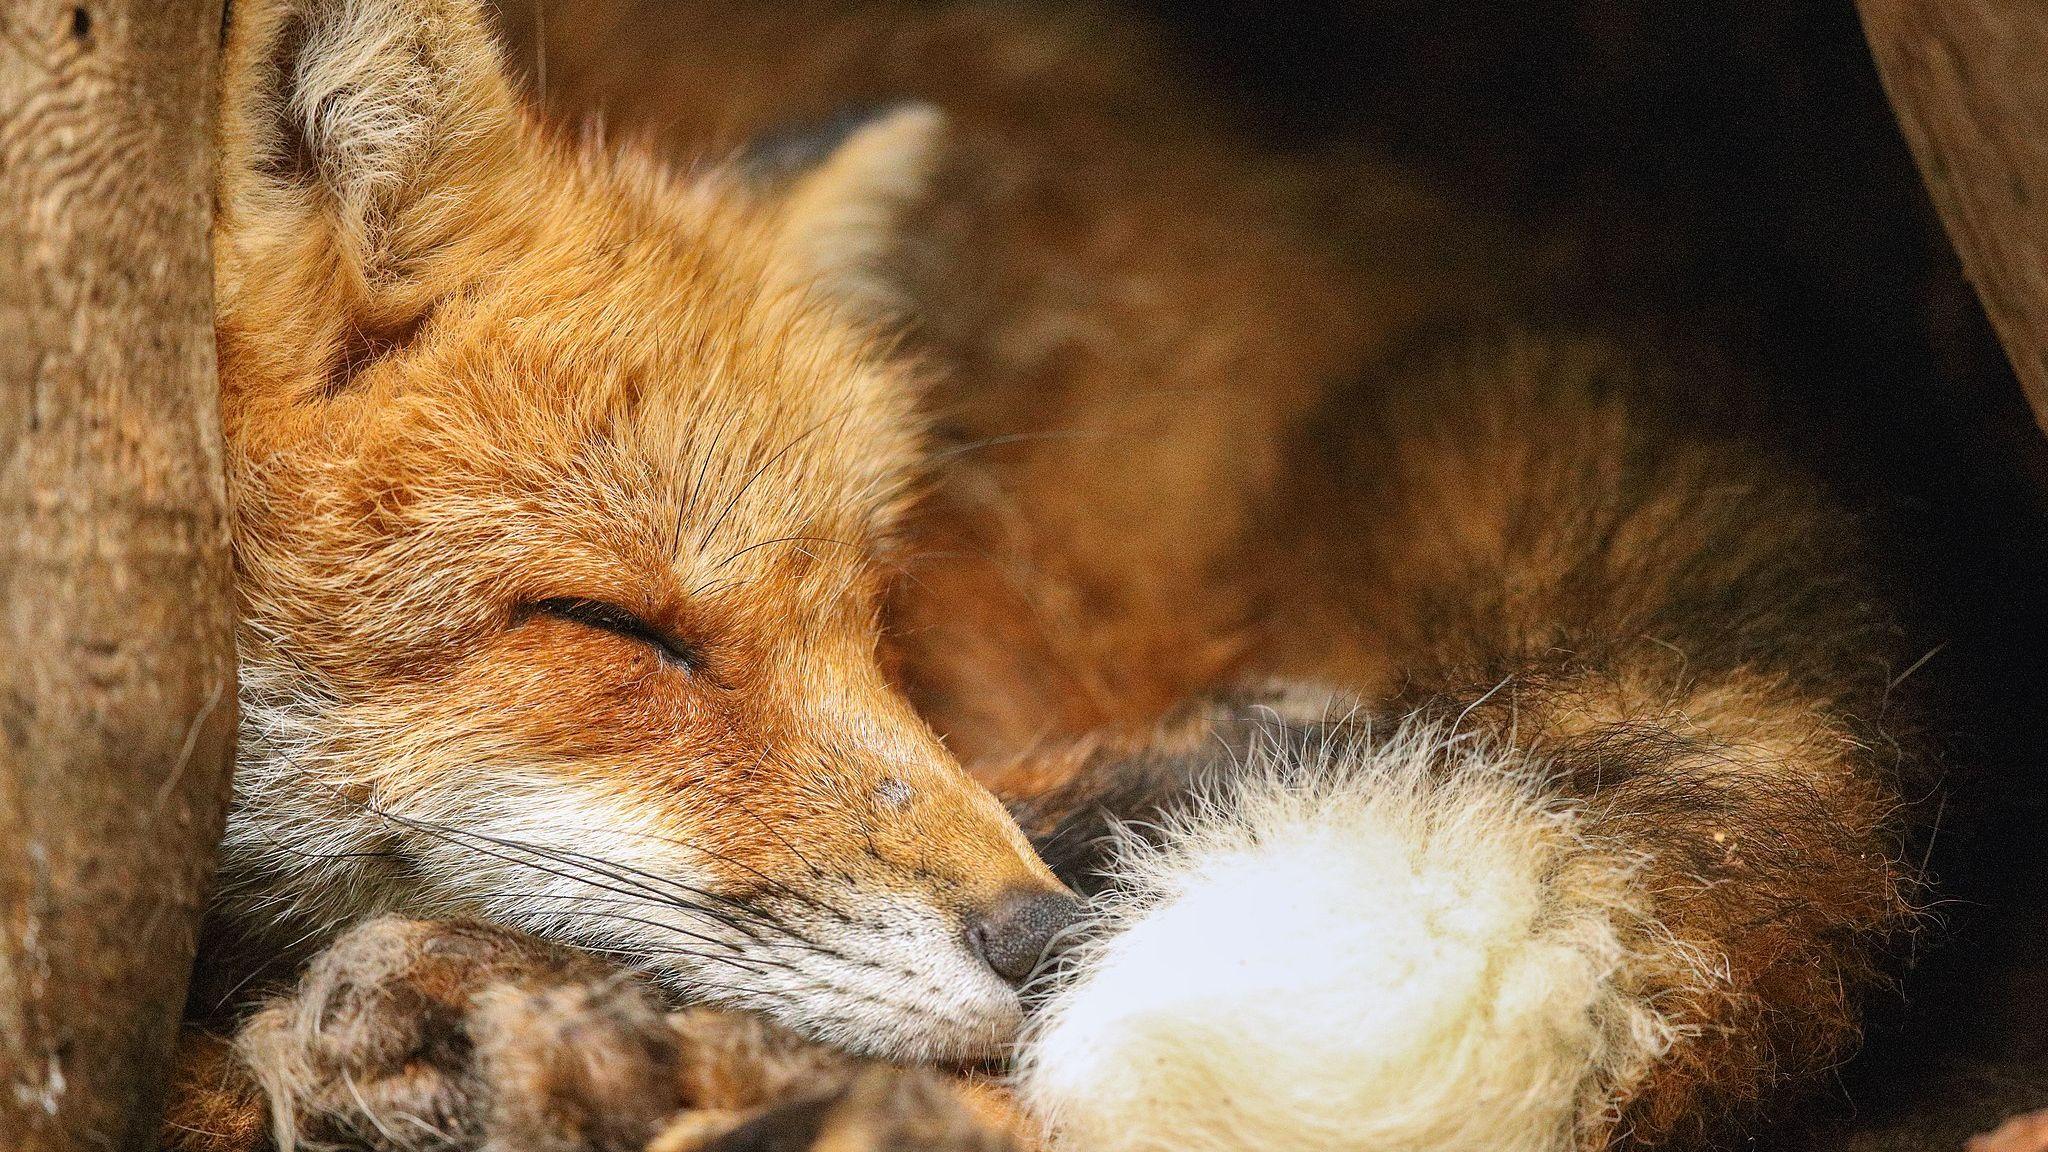 Sleeping Red fox at Zao Fox Village